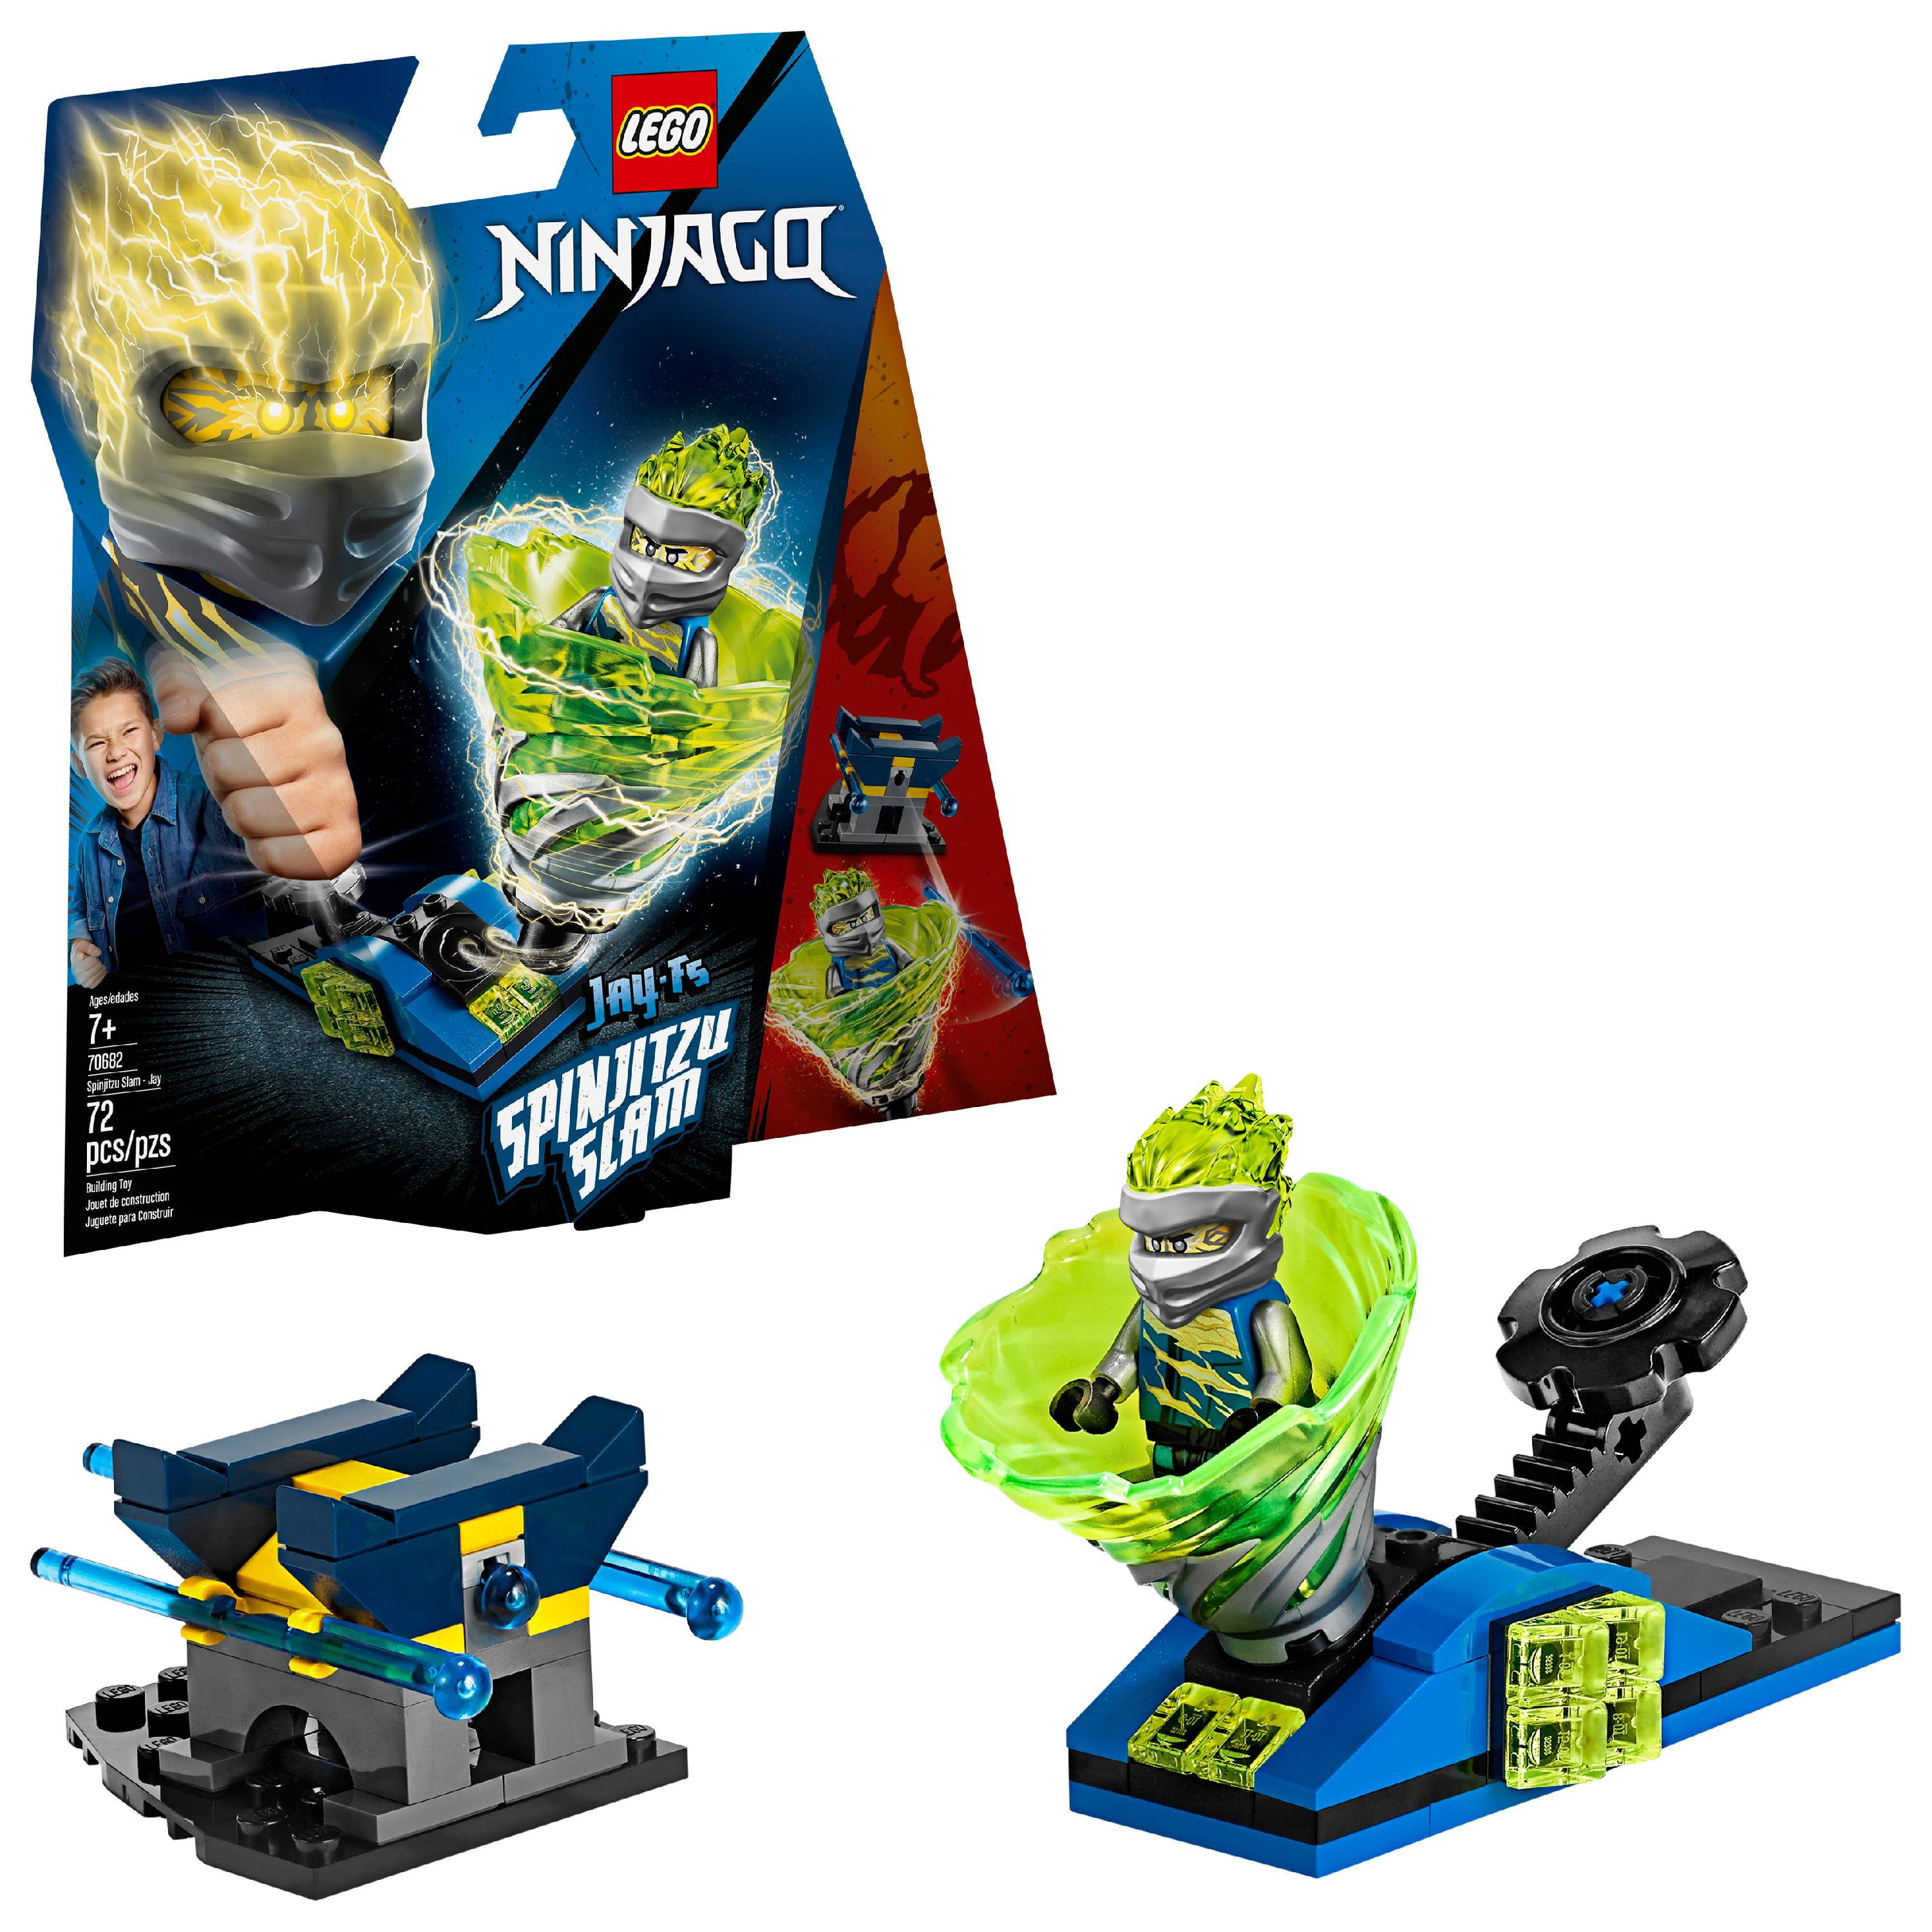 new. minifigure set 70683 njo535 LEGO Zane FS Spinjitzu Slam